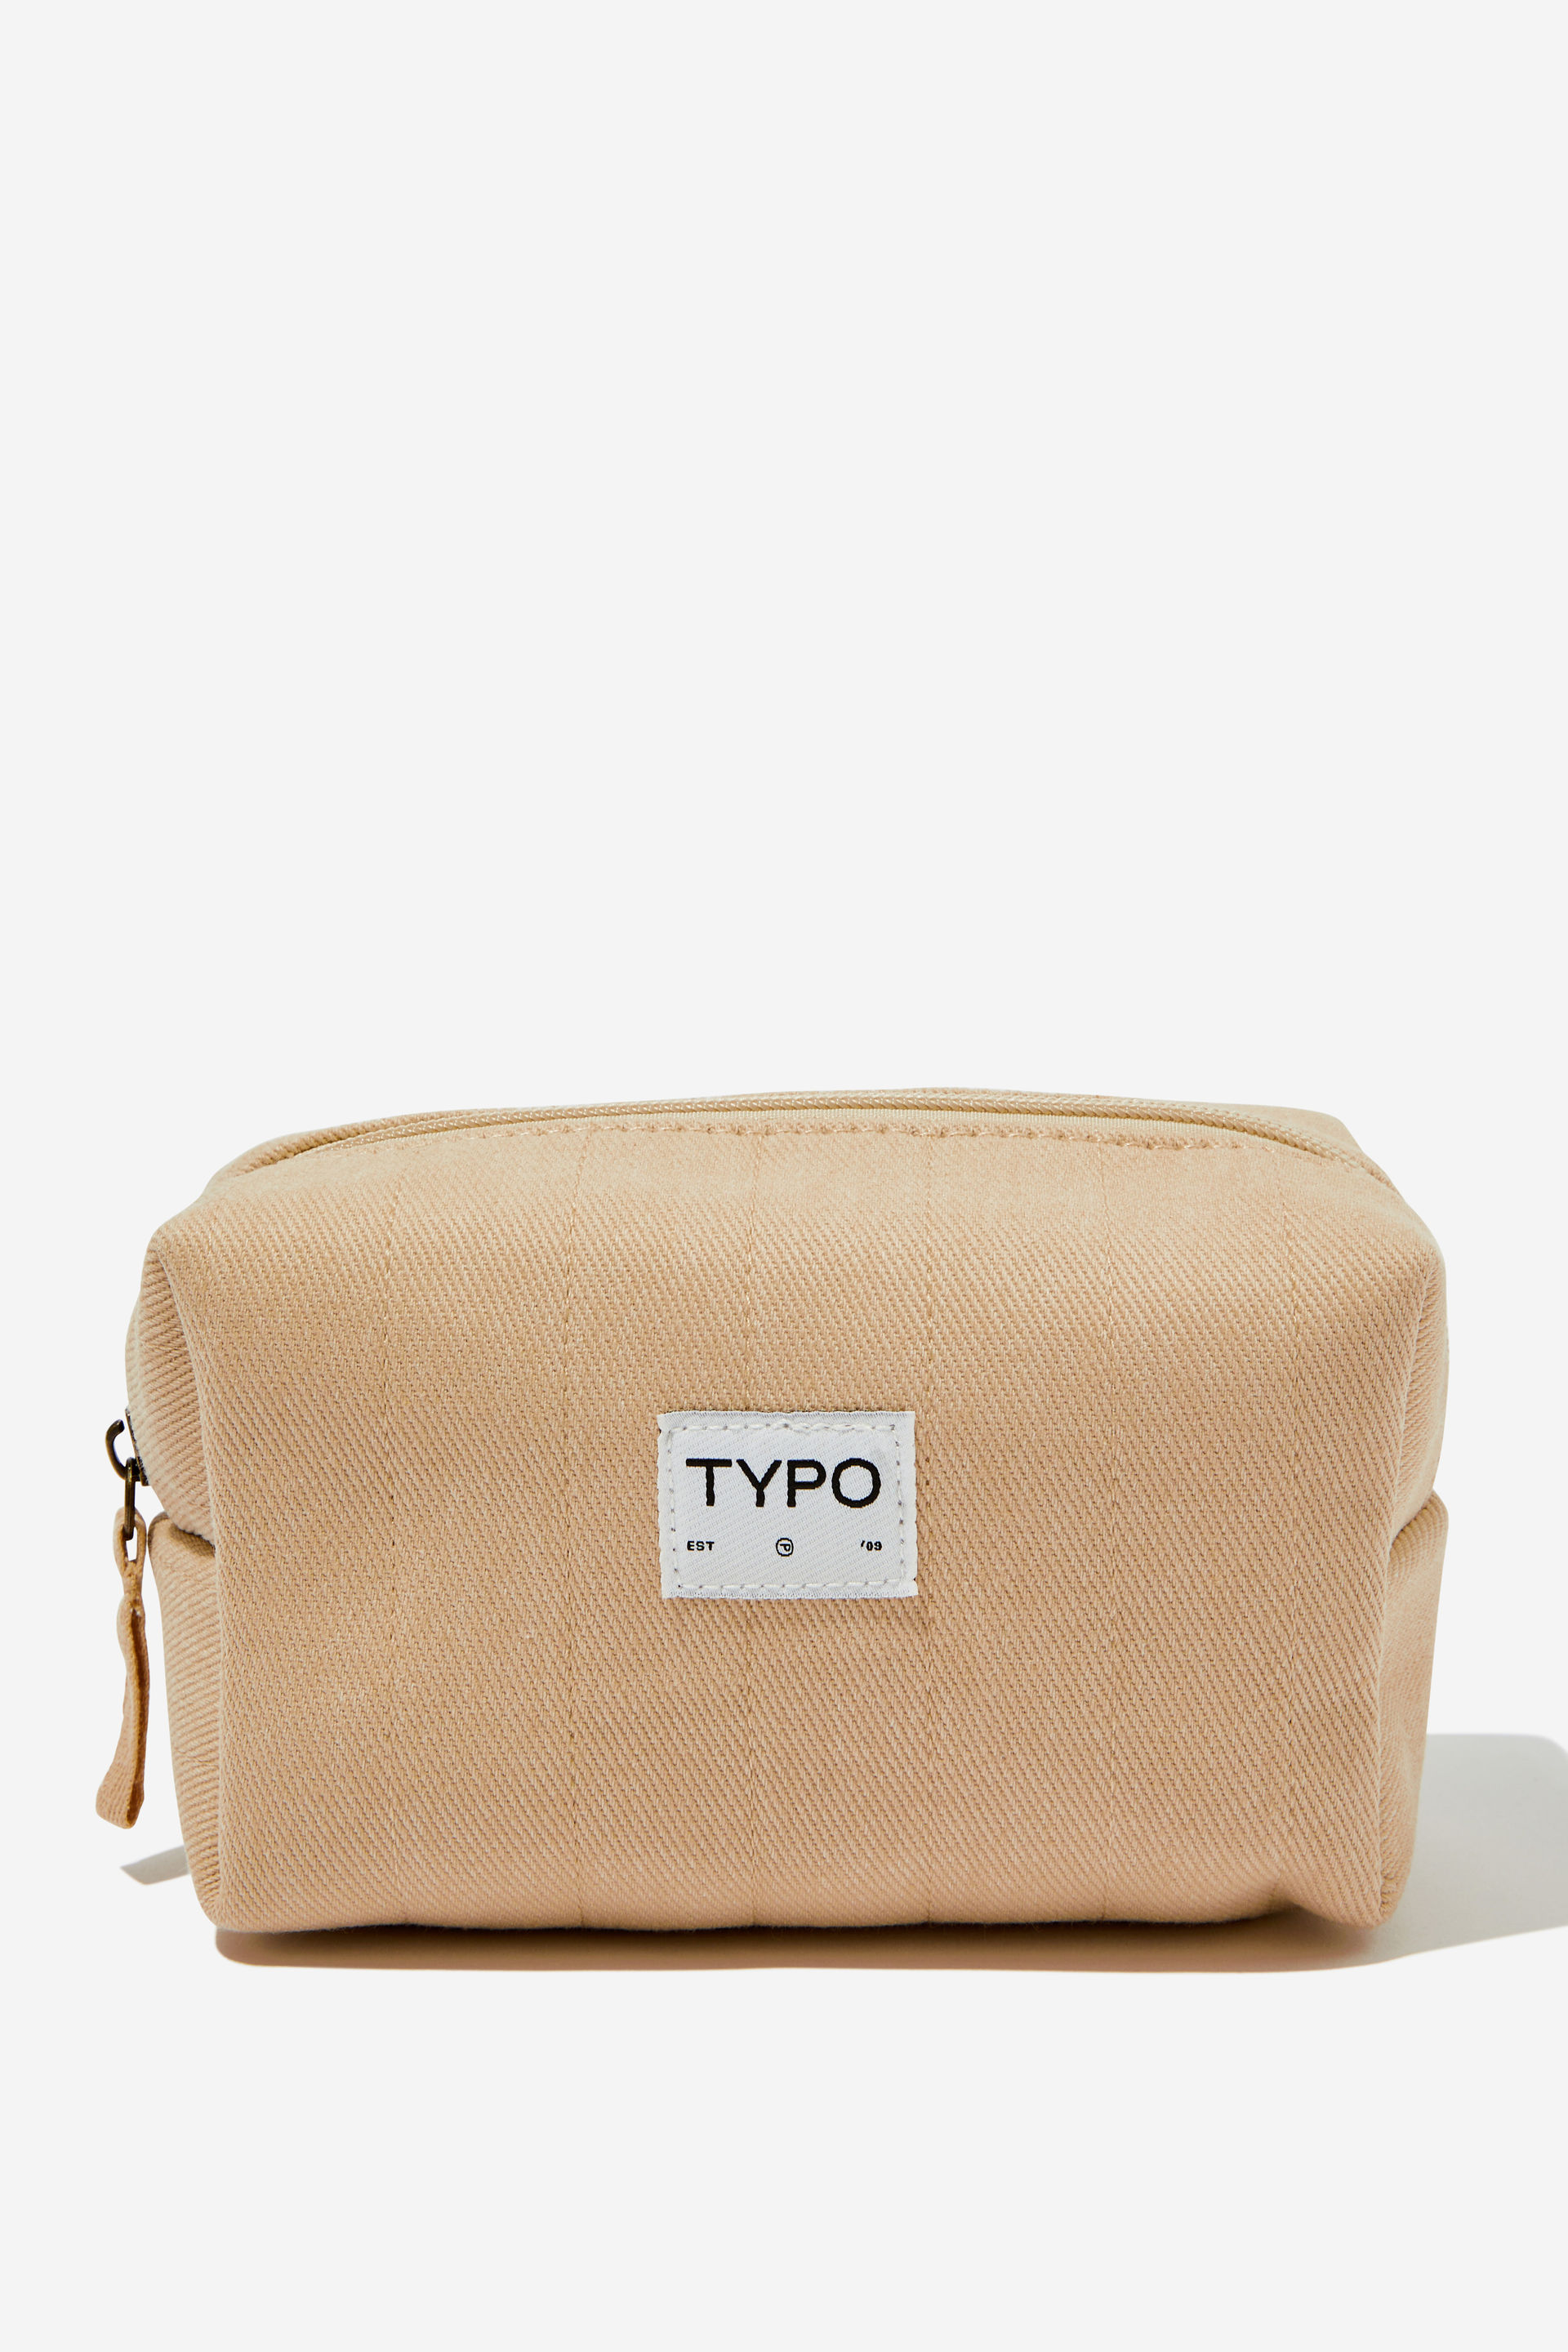 Typo - Florence Pencil Case - Latte